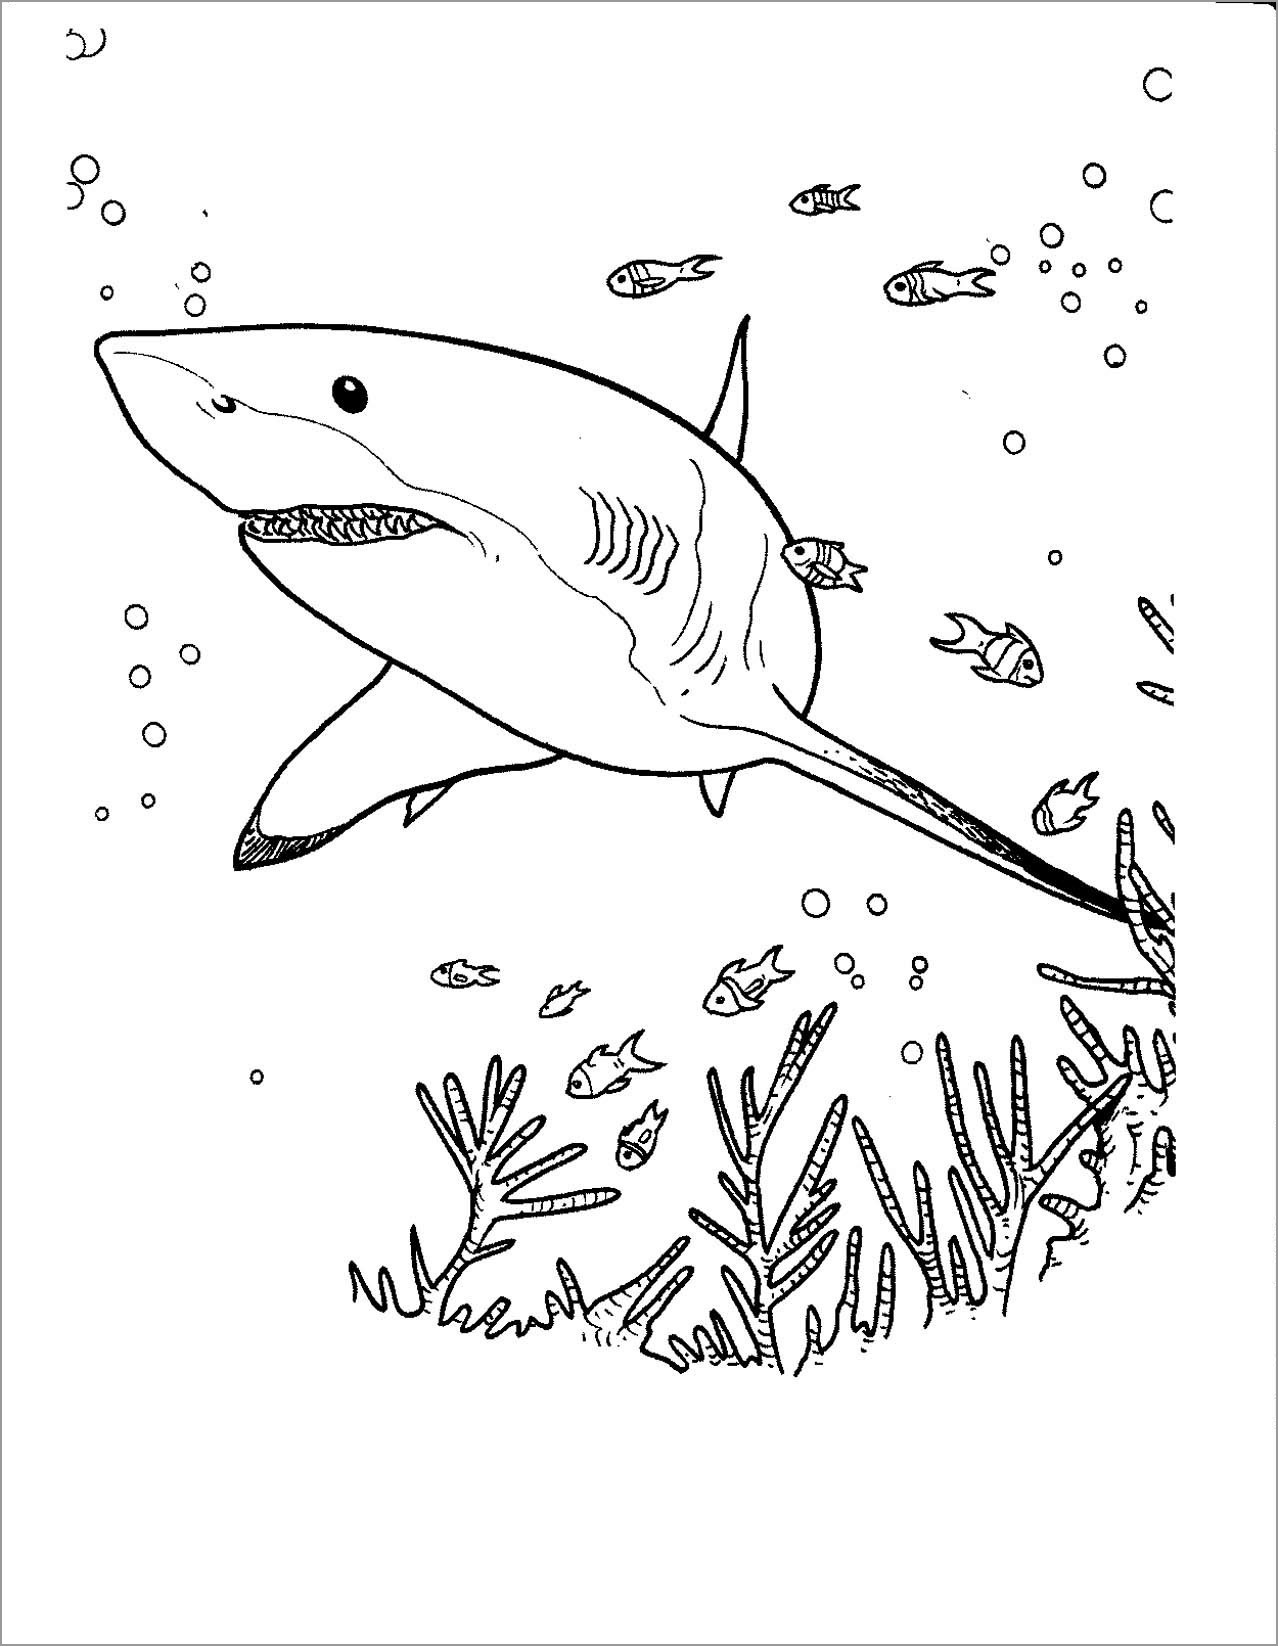 Megalodon Shark Coloring Page   ColoringBay